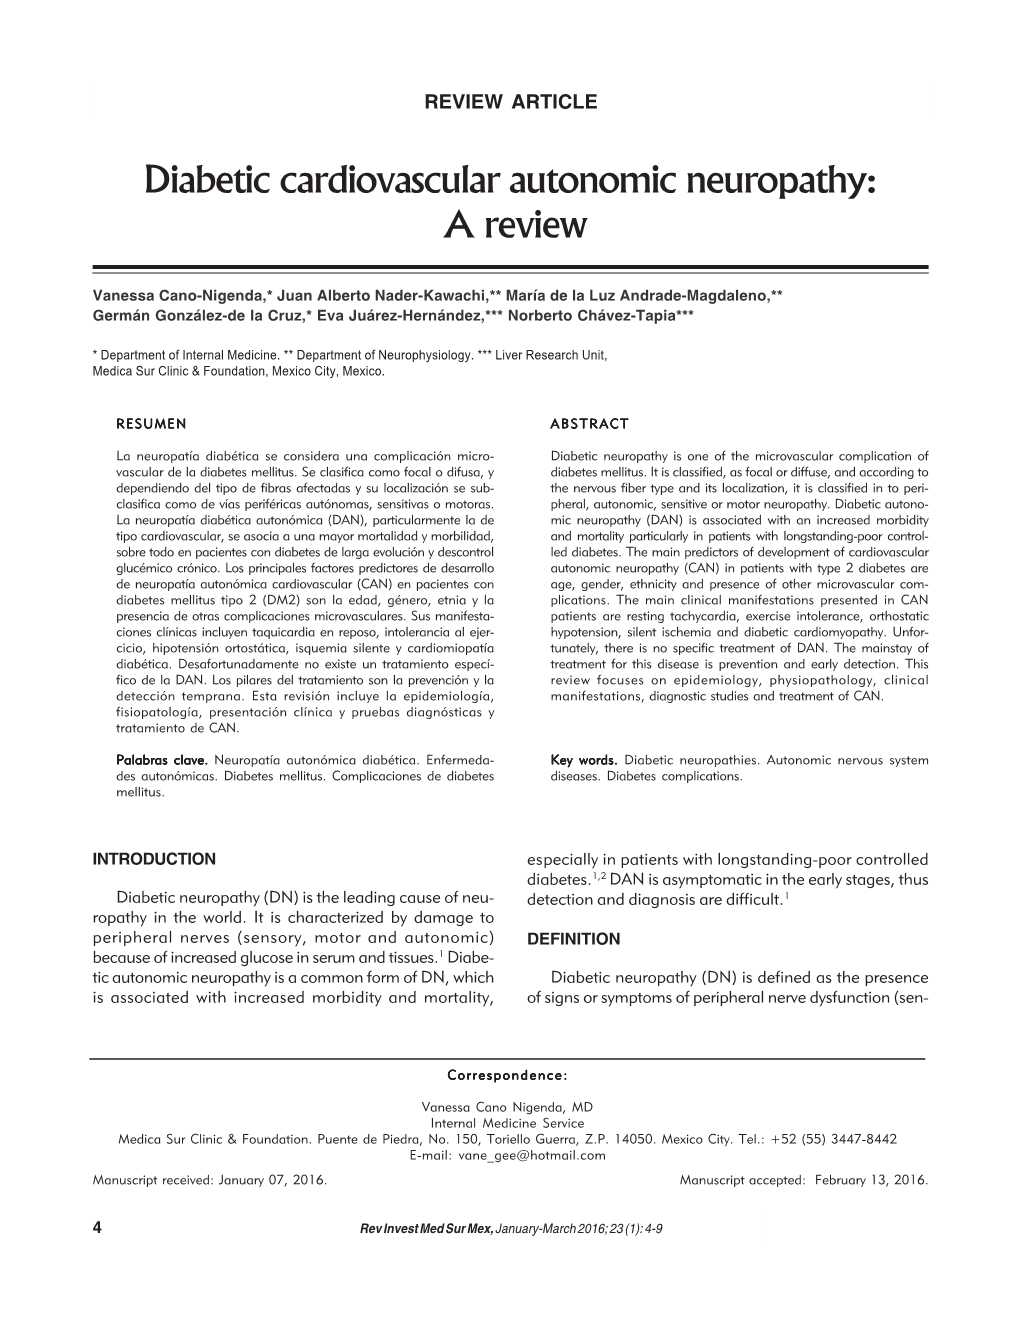 Diabetic Cardiovascular Autonomic Neuropathy: a Review